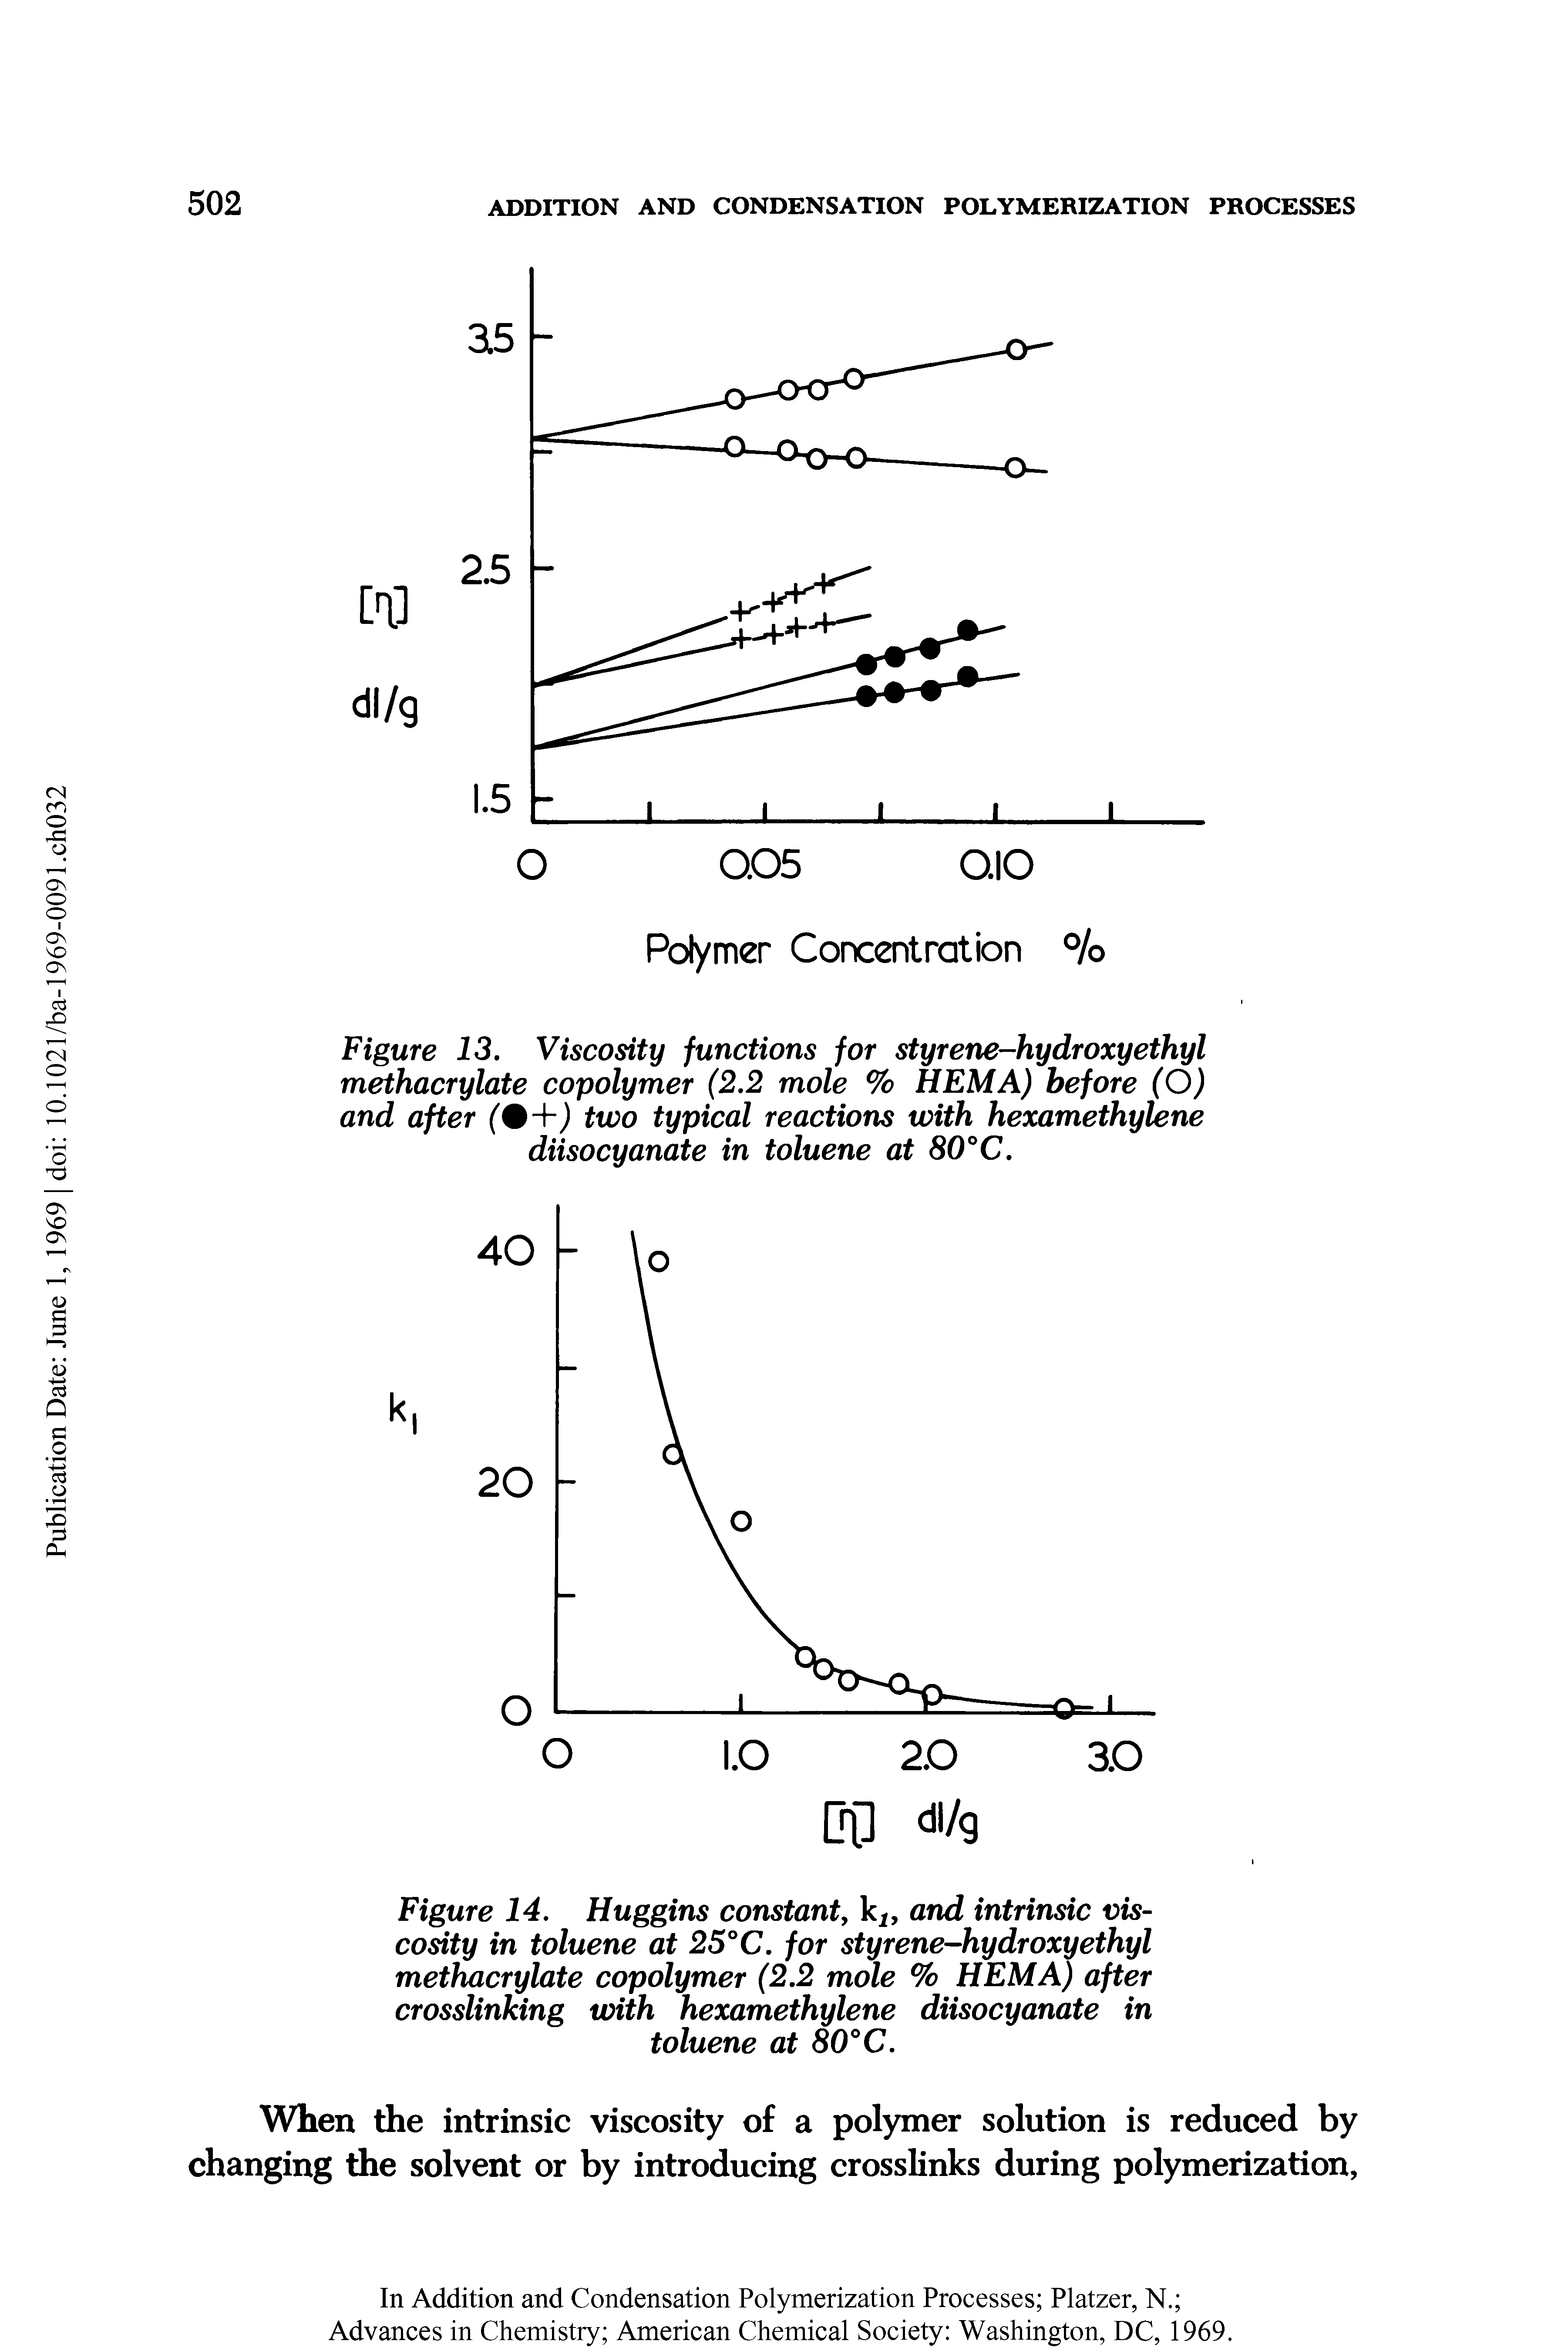 Figure 14. Huggins constant, k1 and intrinsic viscosity in toluene at 25°C. for styrene-hydroxyethyl methacrylate copolymer (2.2 mole % HEM A) after crosslinking with hexamethylene diisocyanate in toluene at 80°C.